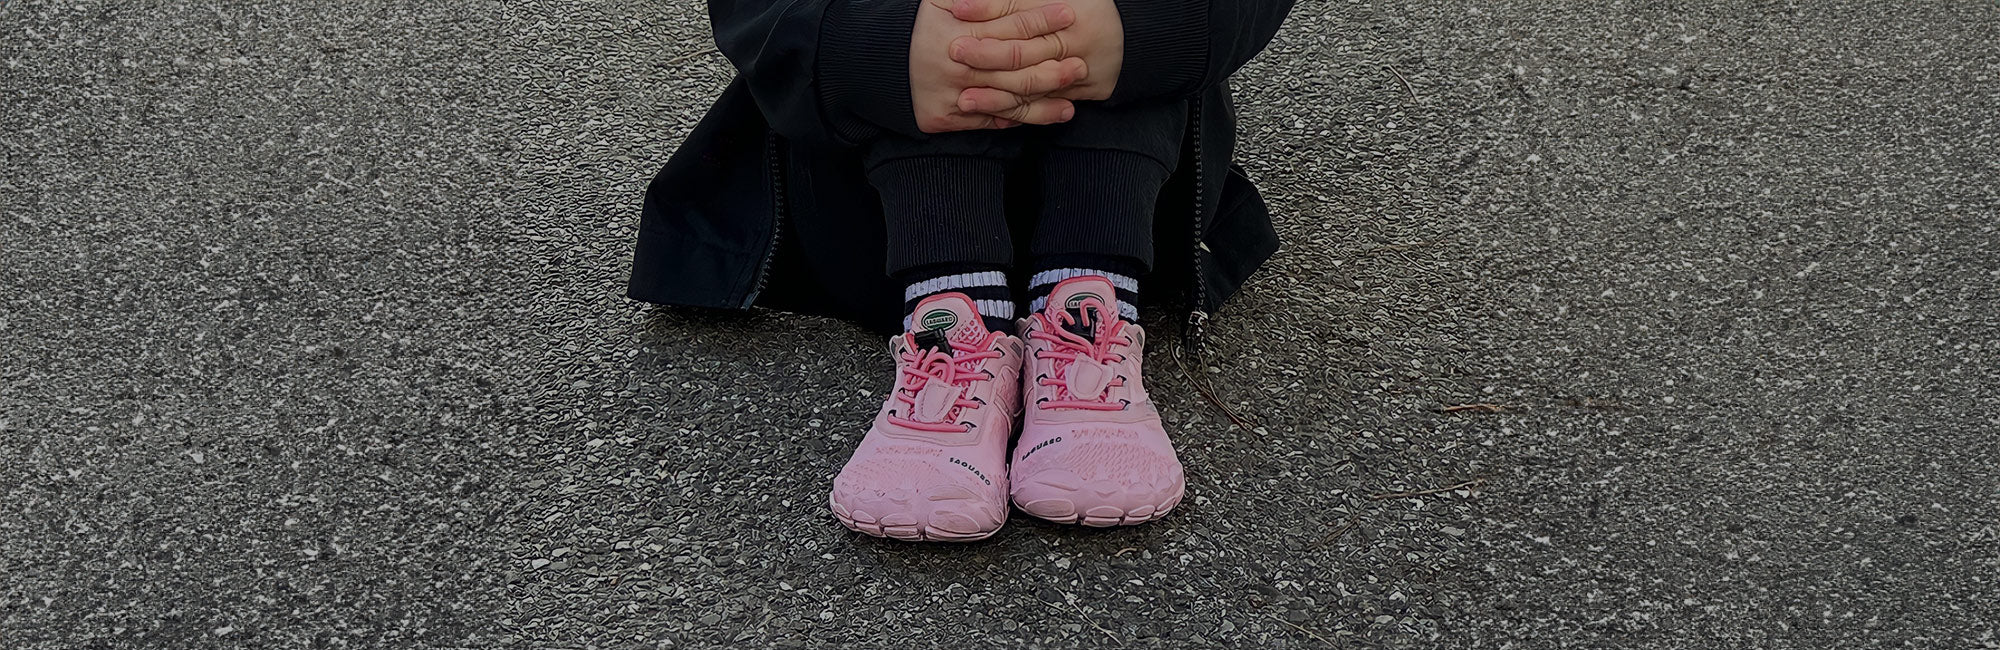 SAGUARO Barefoot Zapatillas de Trail Running Niños Niñas